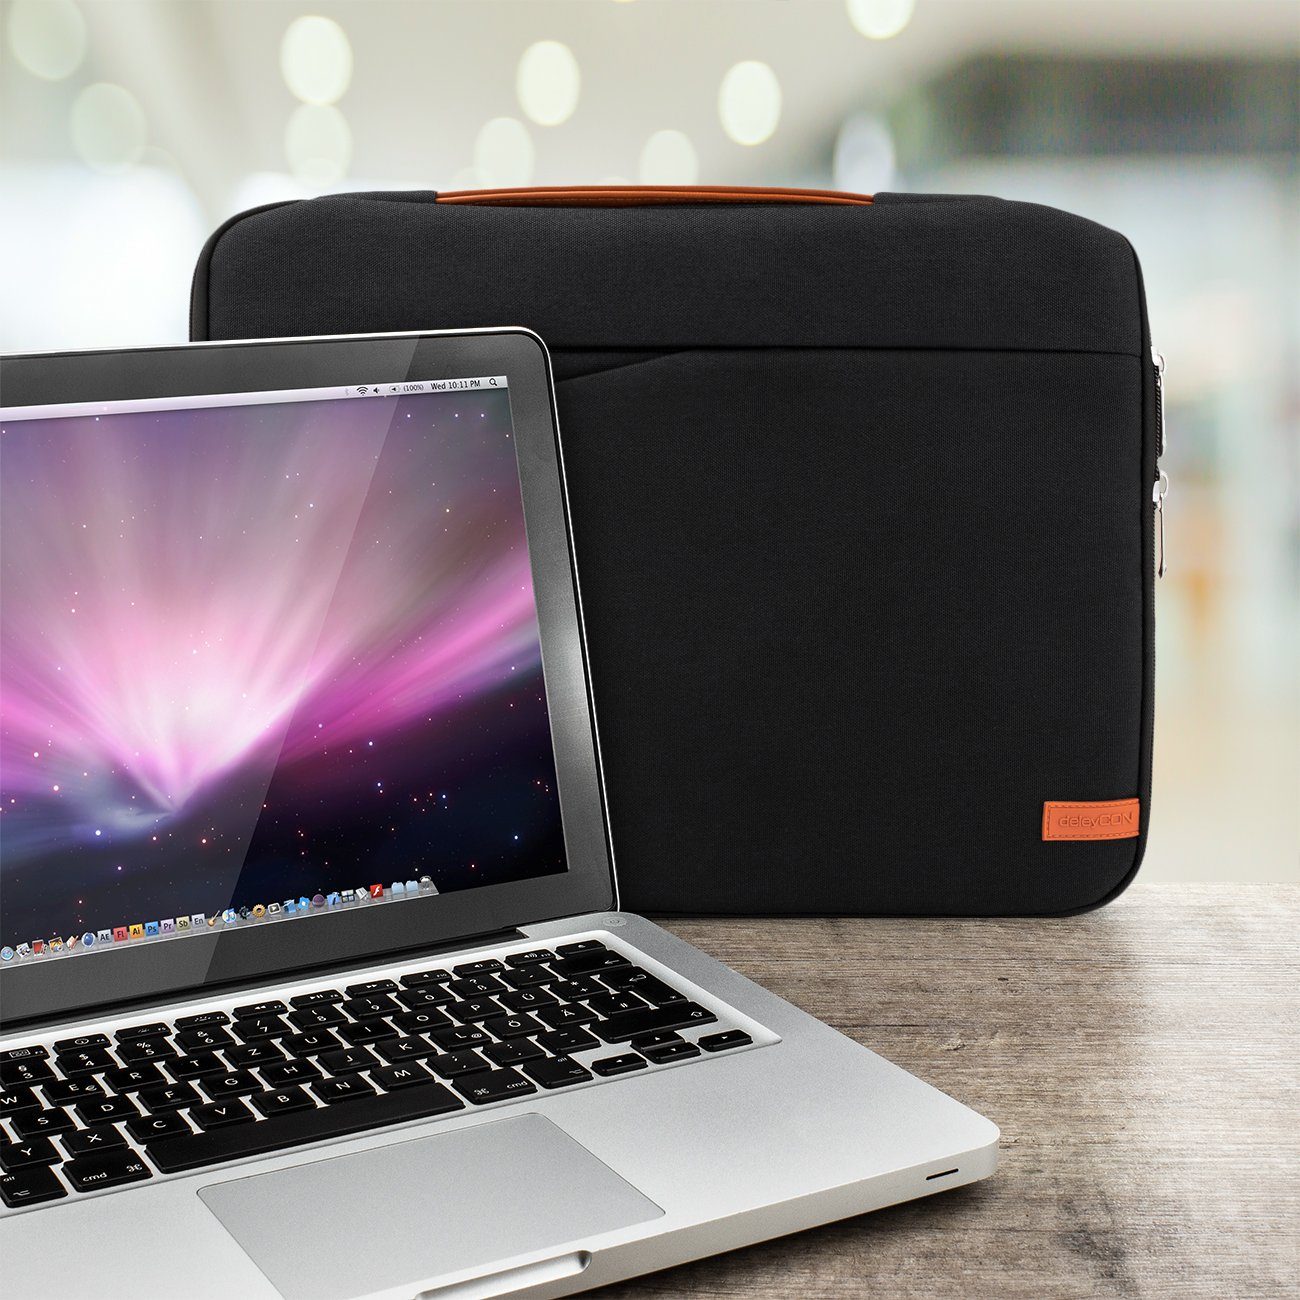 deleyCON Businesstasche Zoll Tasche Laptop MAC bis Netbook (39,6cm) Notebook deleyCON 15,6“